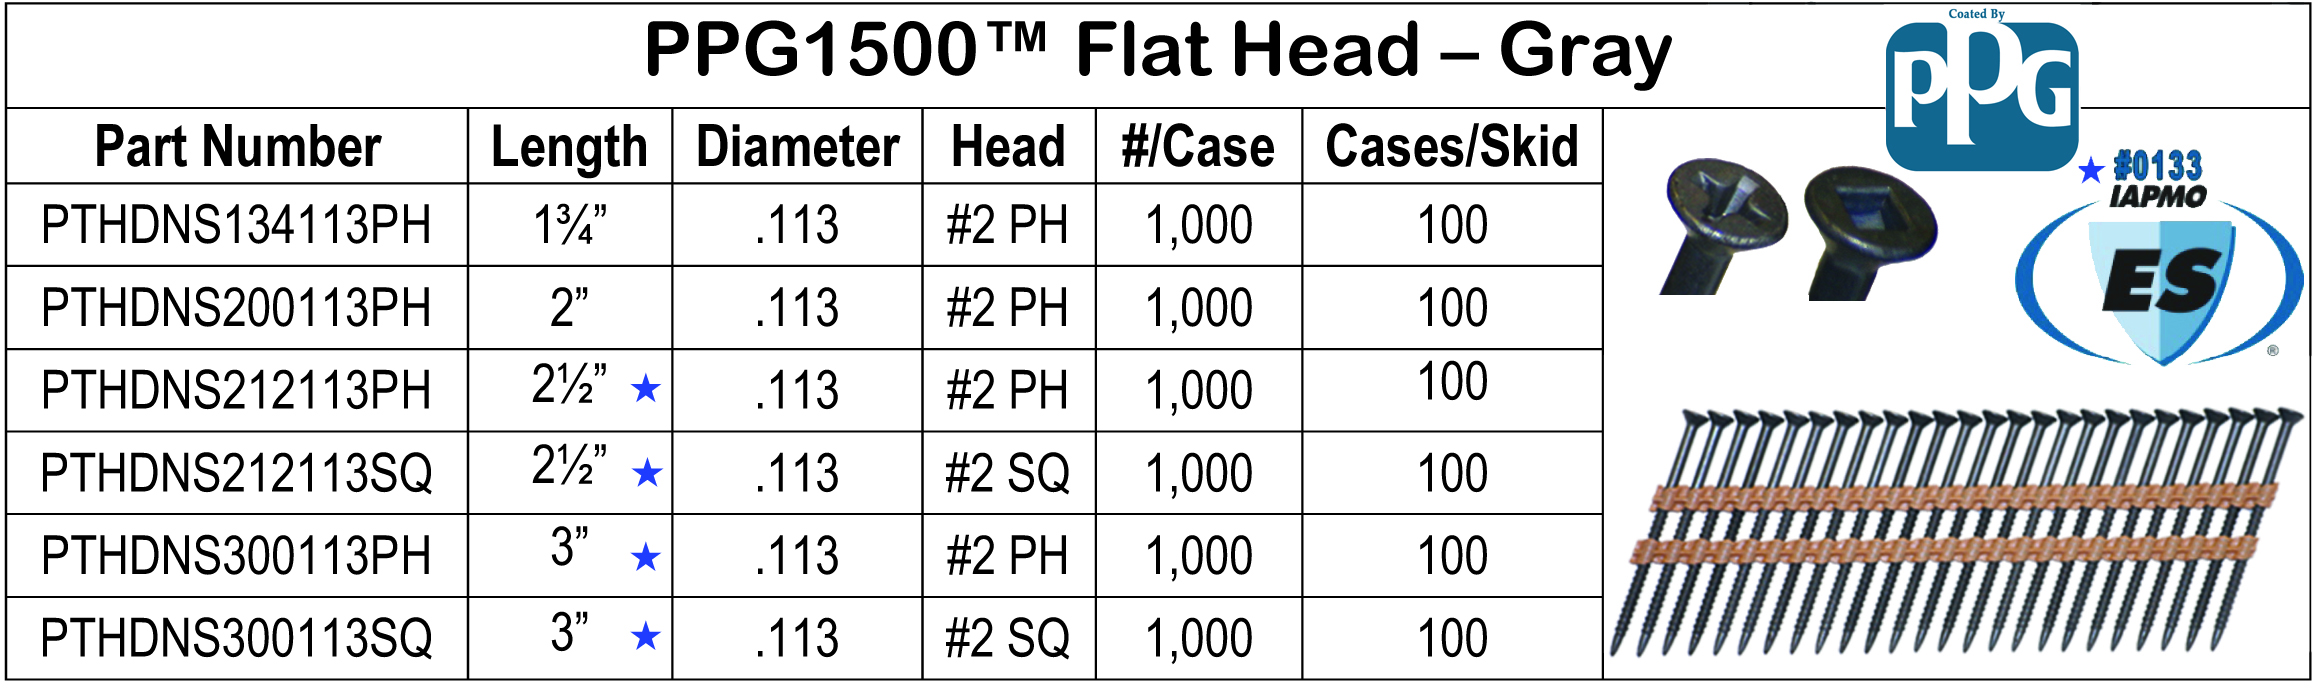 PPG1500 Flat Head Gray Strip